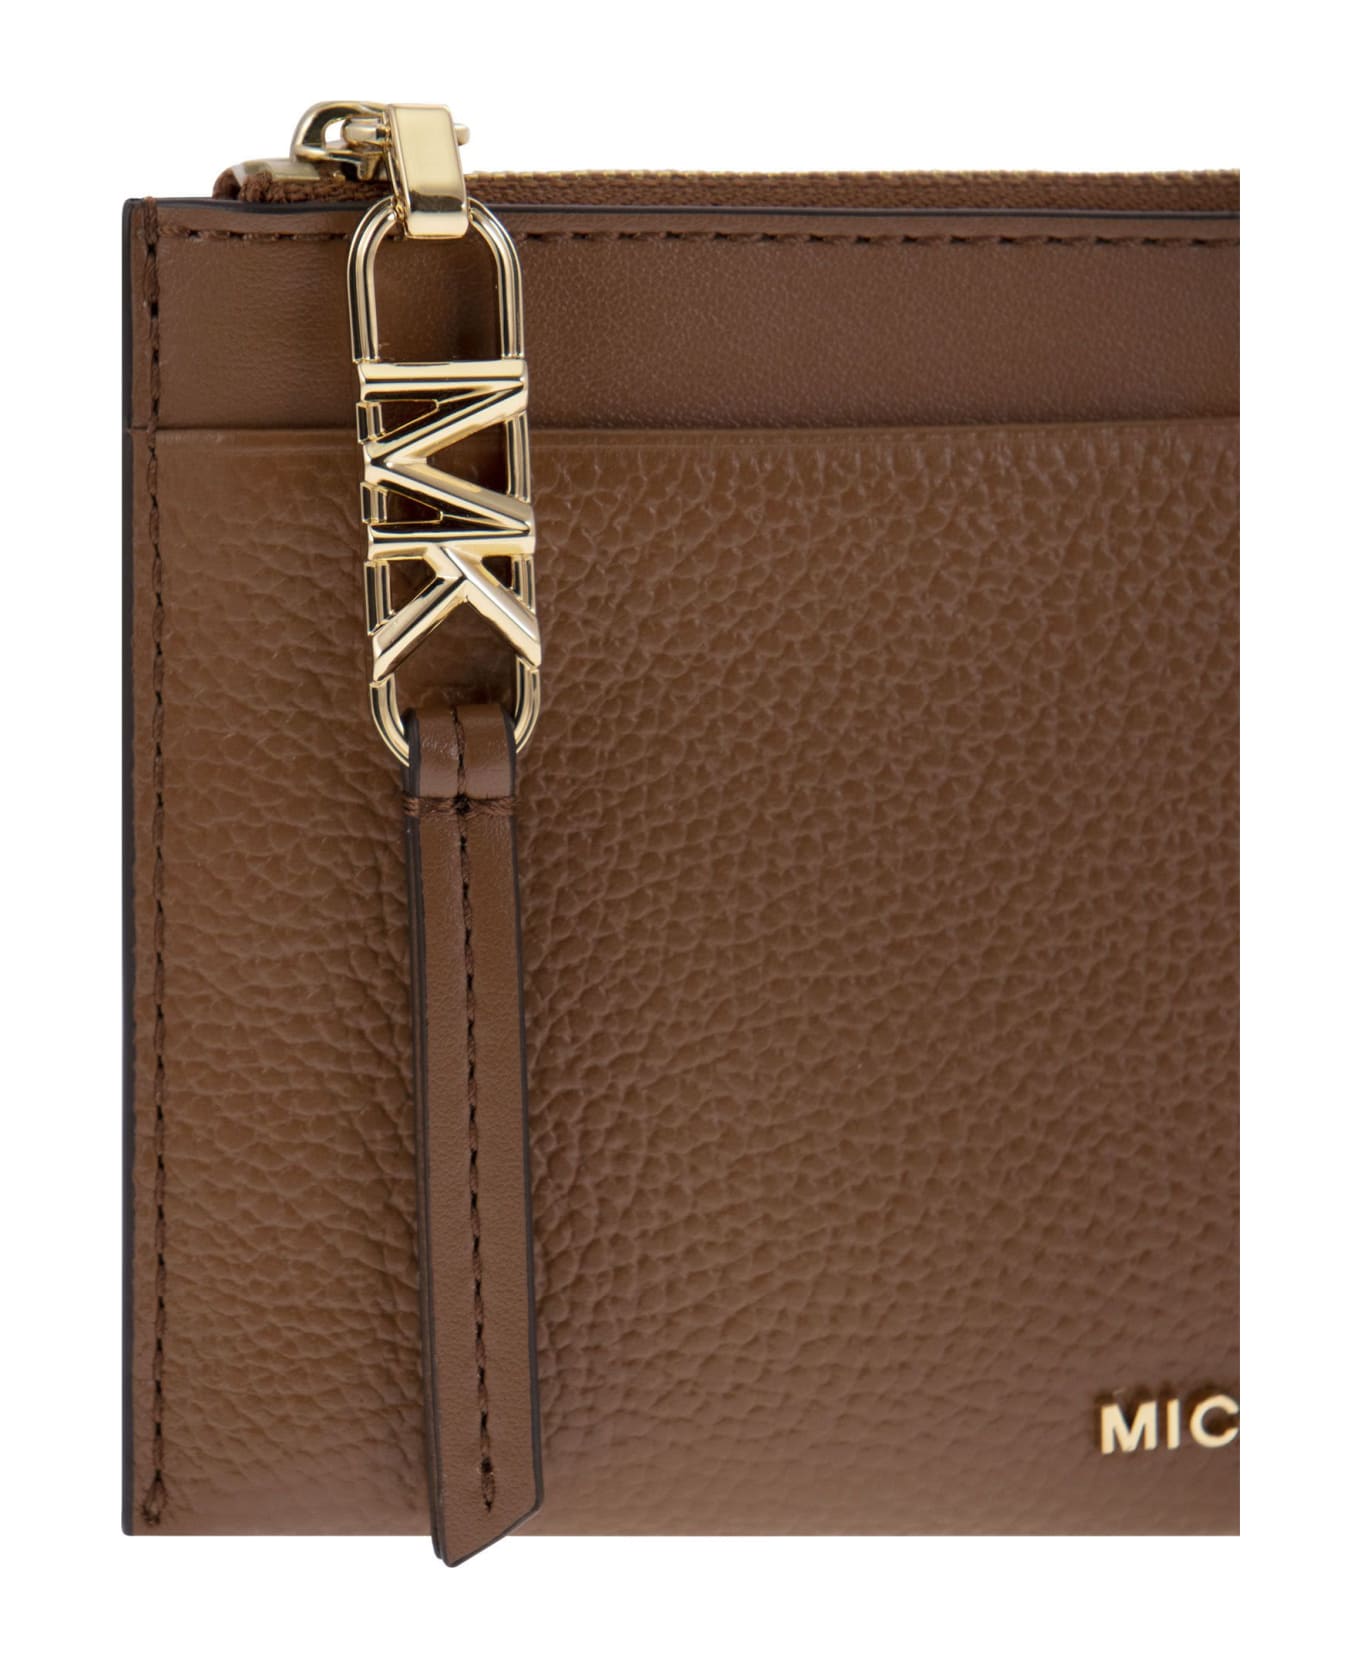 Michael Kors Credit Card Holder - Leather